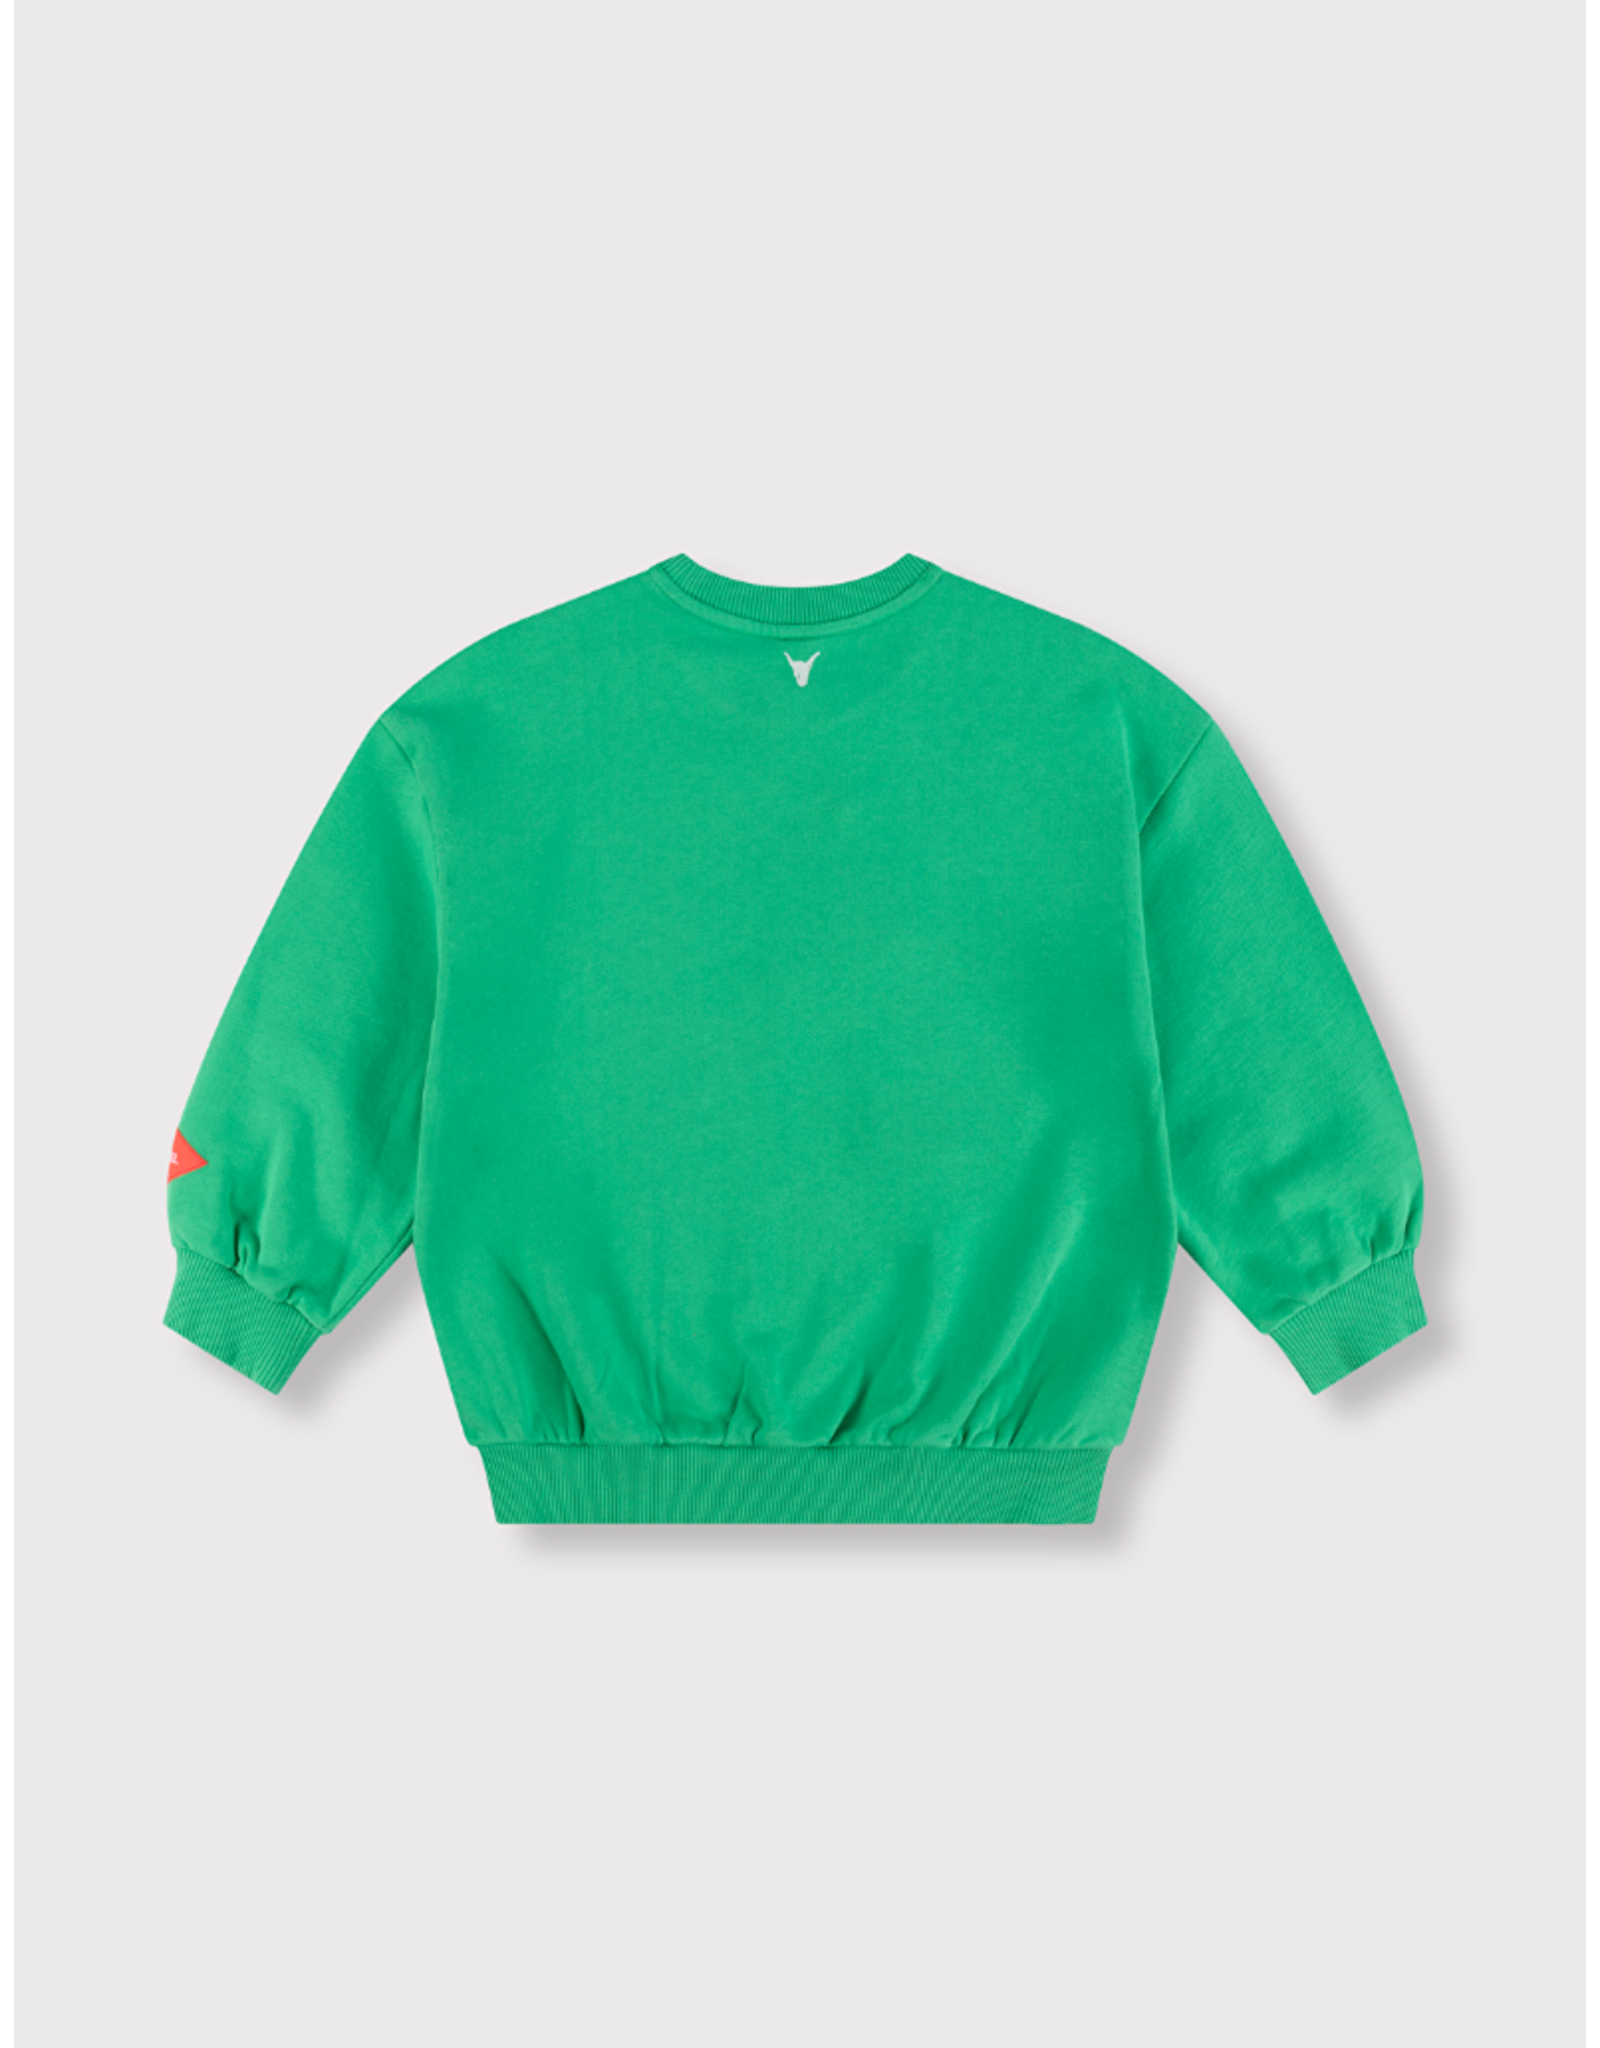 Alix mini sweater the label groen